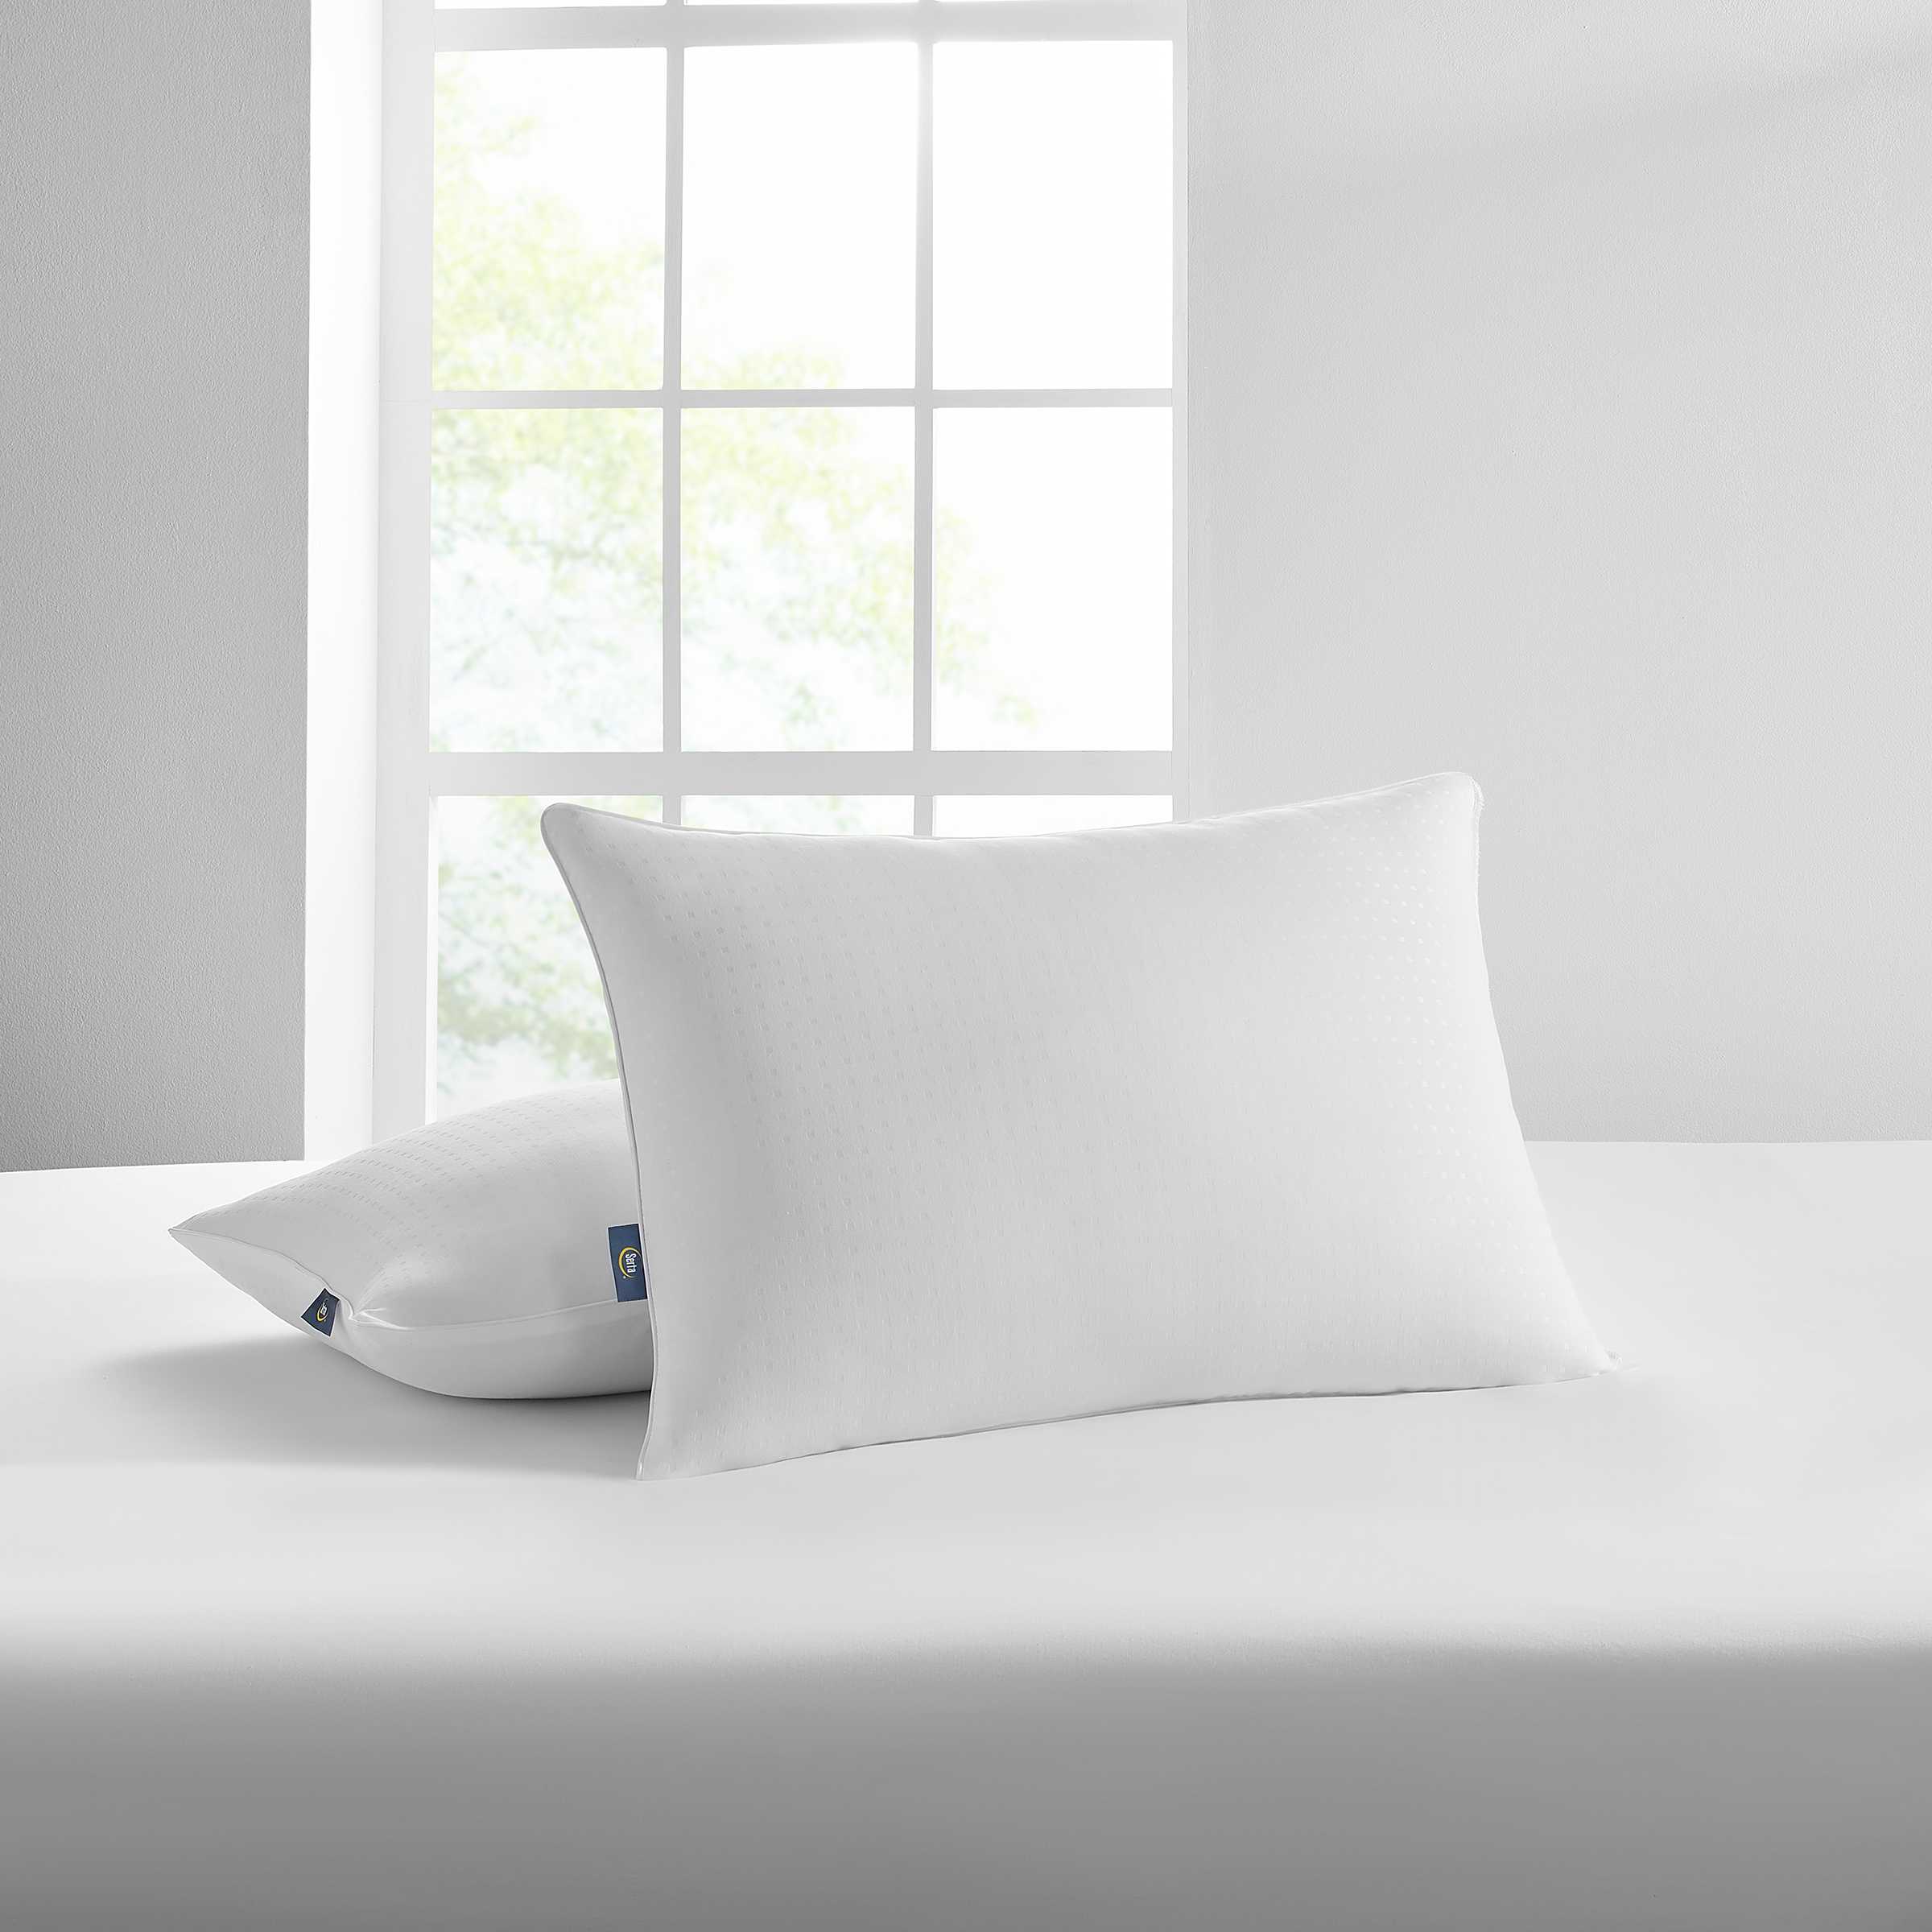 Serta Sertapedic Won't Go Flat White Pillow, 2 Count - image 4 of 5